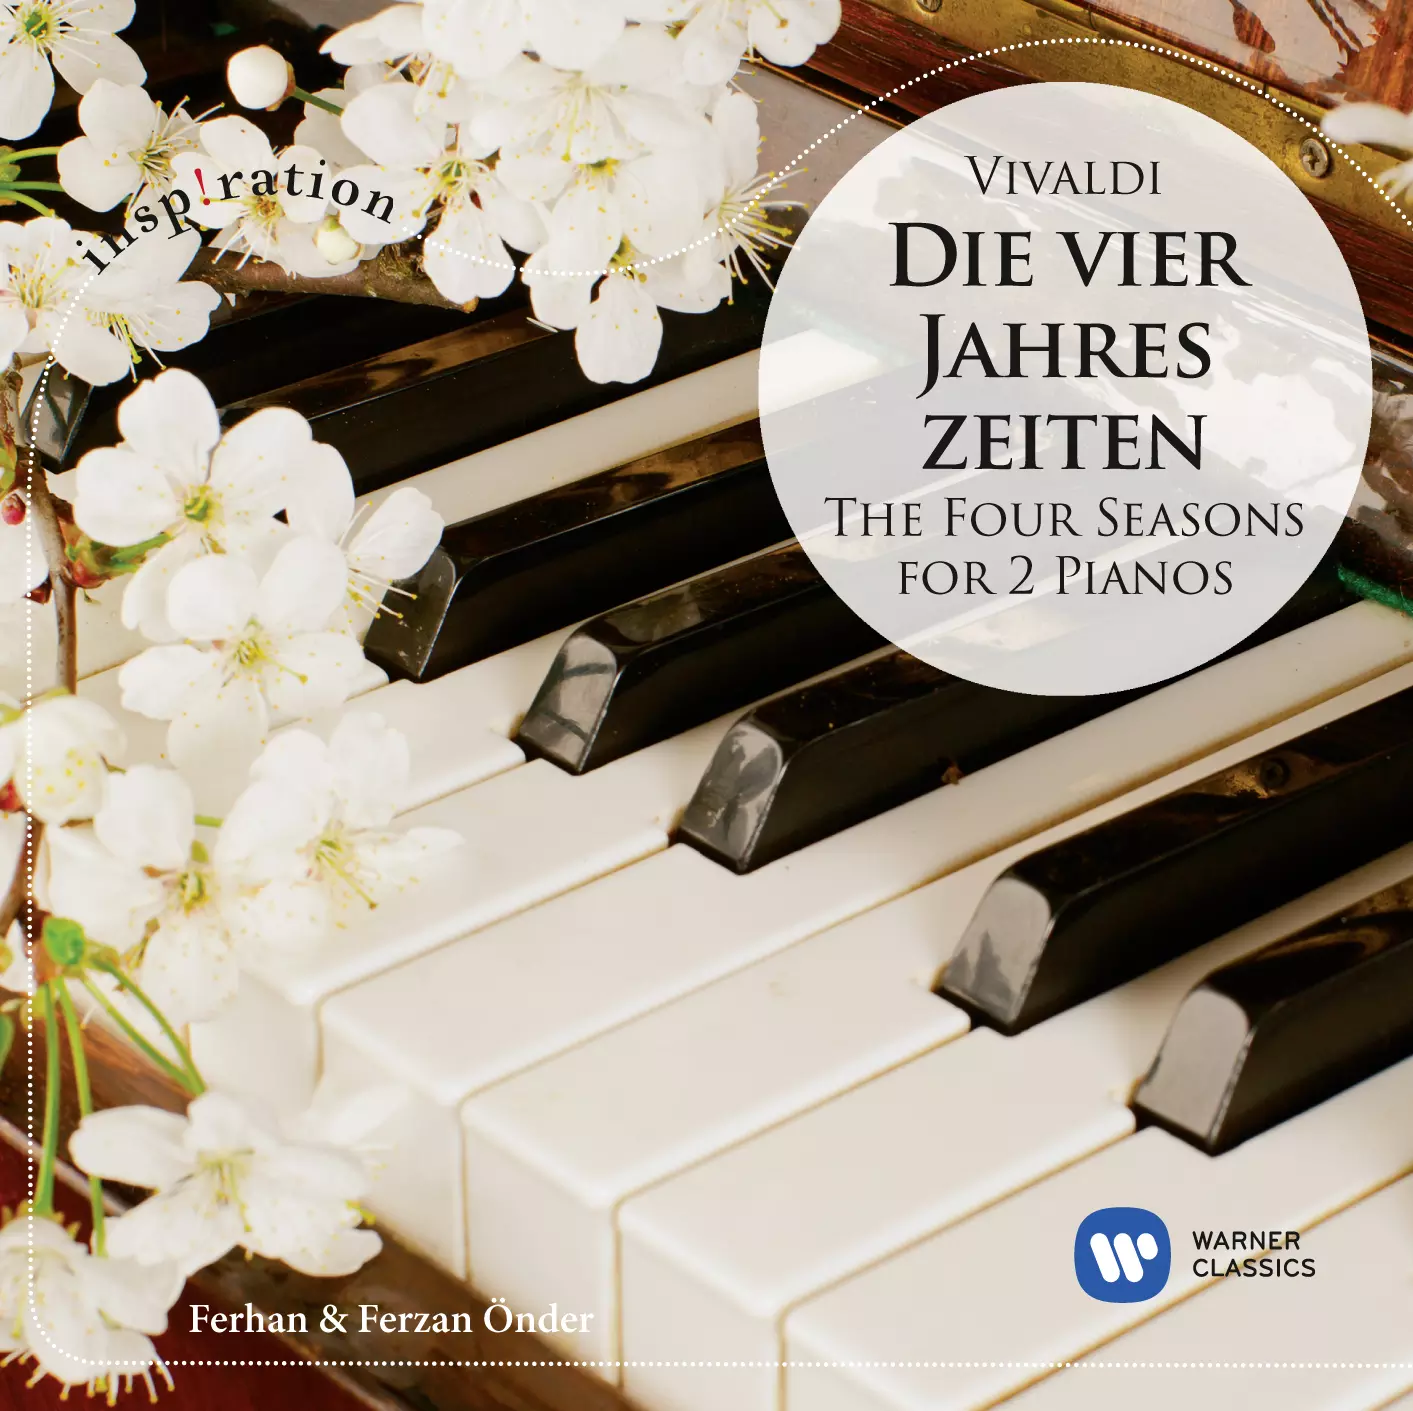 The Four Seasons – Vivaldi for 2 Pianos